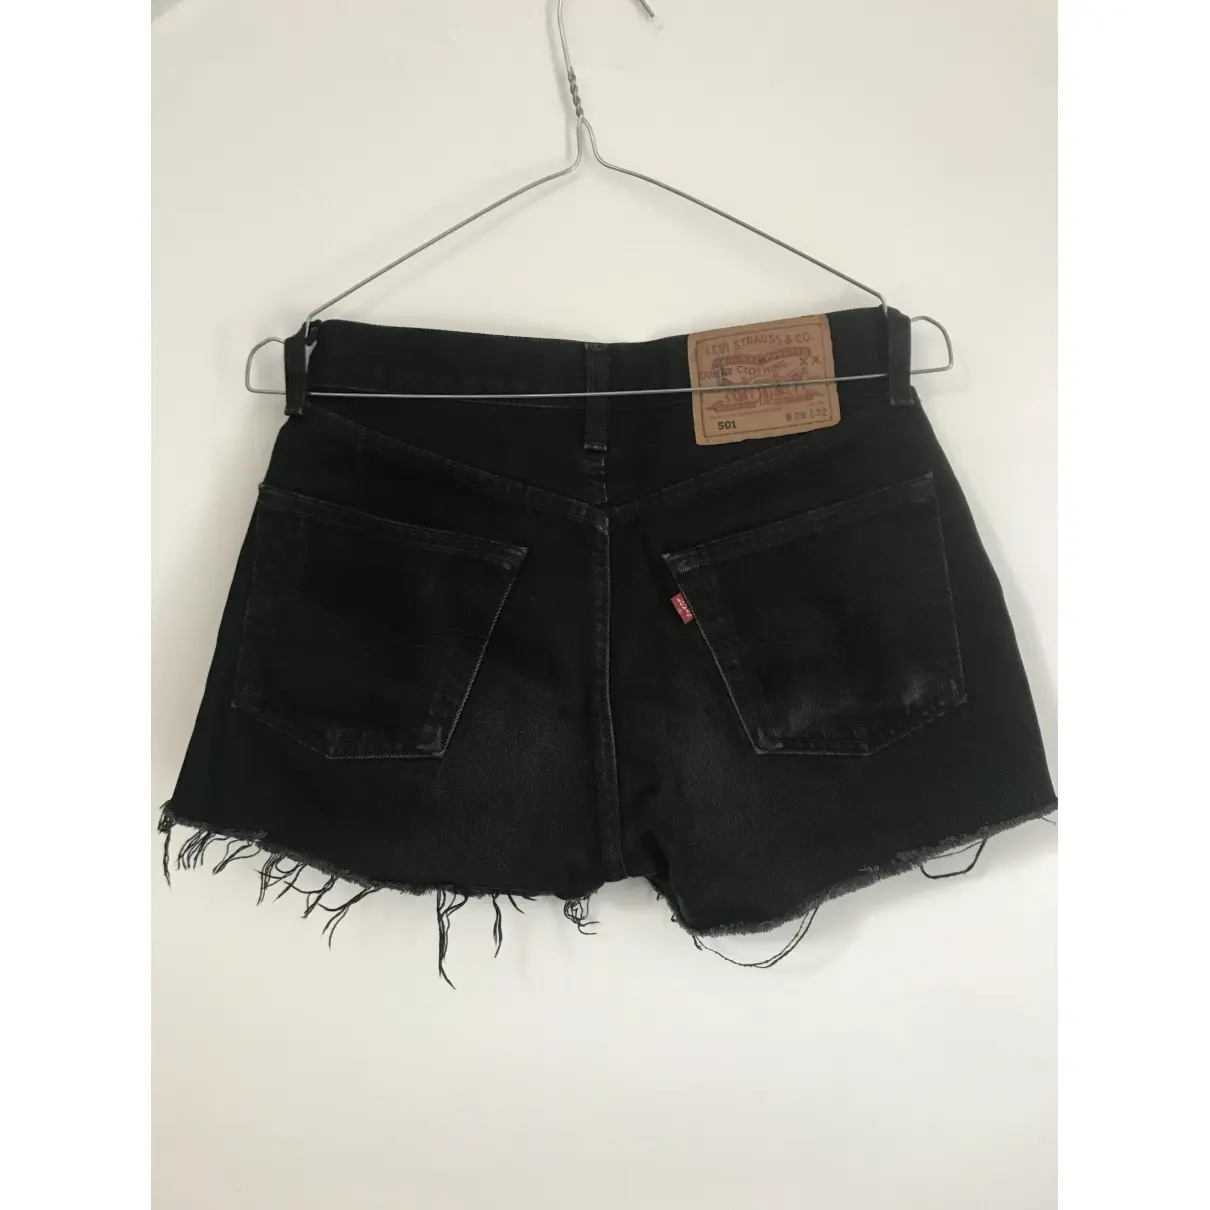 Buy Levi's Black Denim - Jeans Shorts online